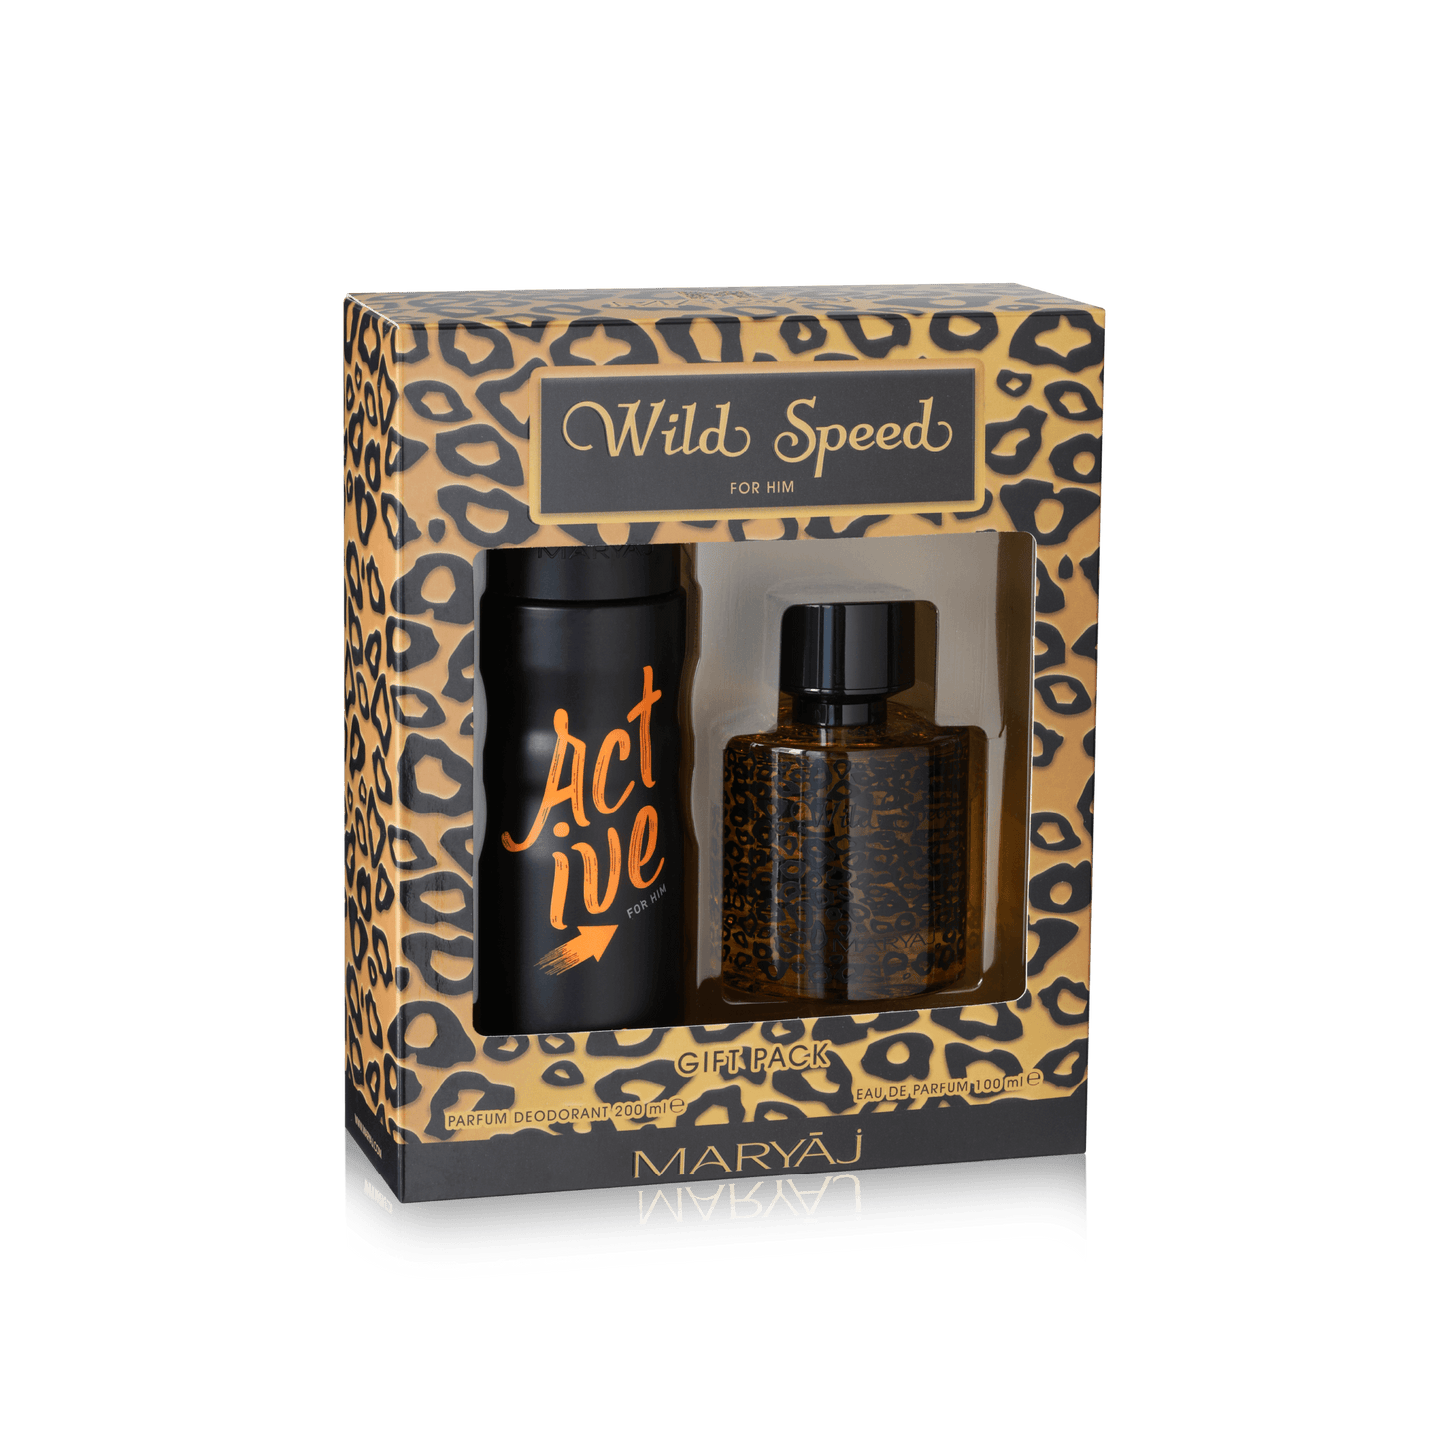 Wild Speed Perfume Gift Set for Men (Eau de Parfum Spray 100ml + Active Perfume Body Spray 200ml)